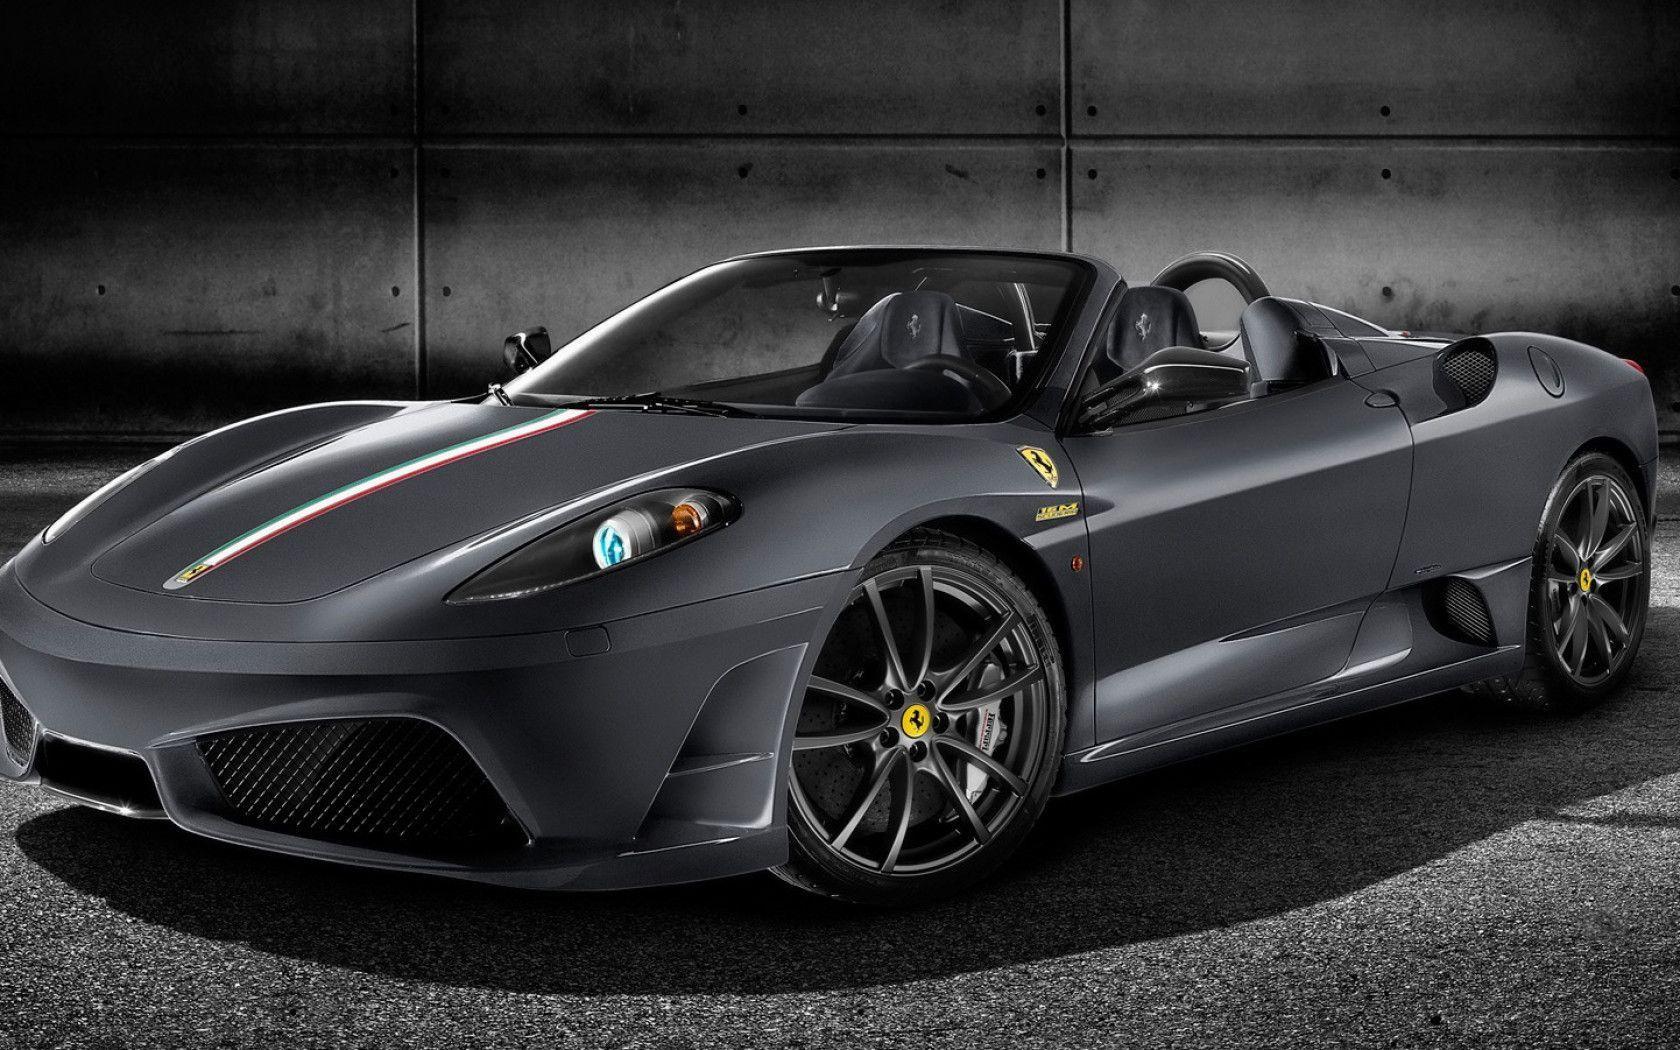 Black Ferrari Wallpaper For Mac #Ma5. Cars. Ferrari